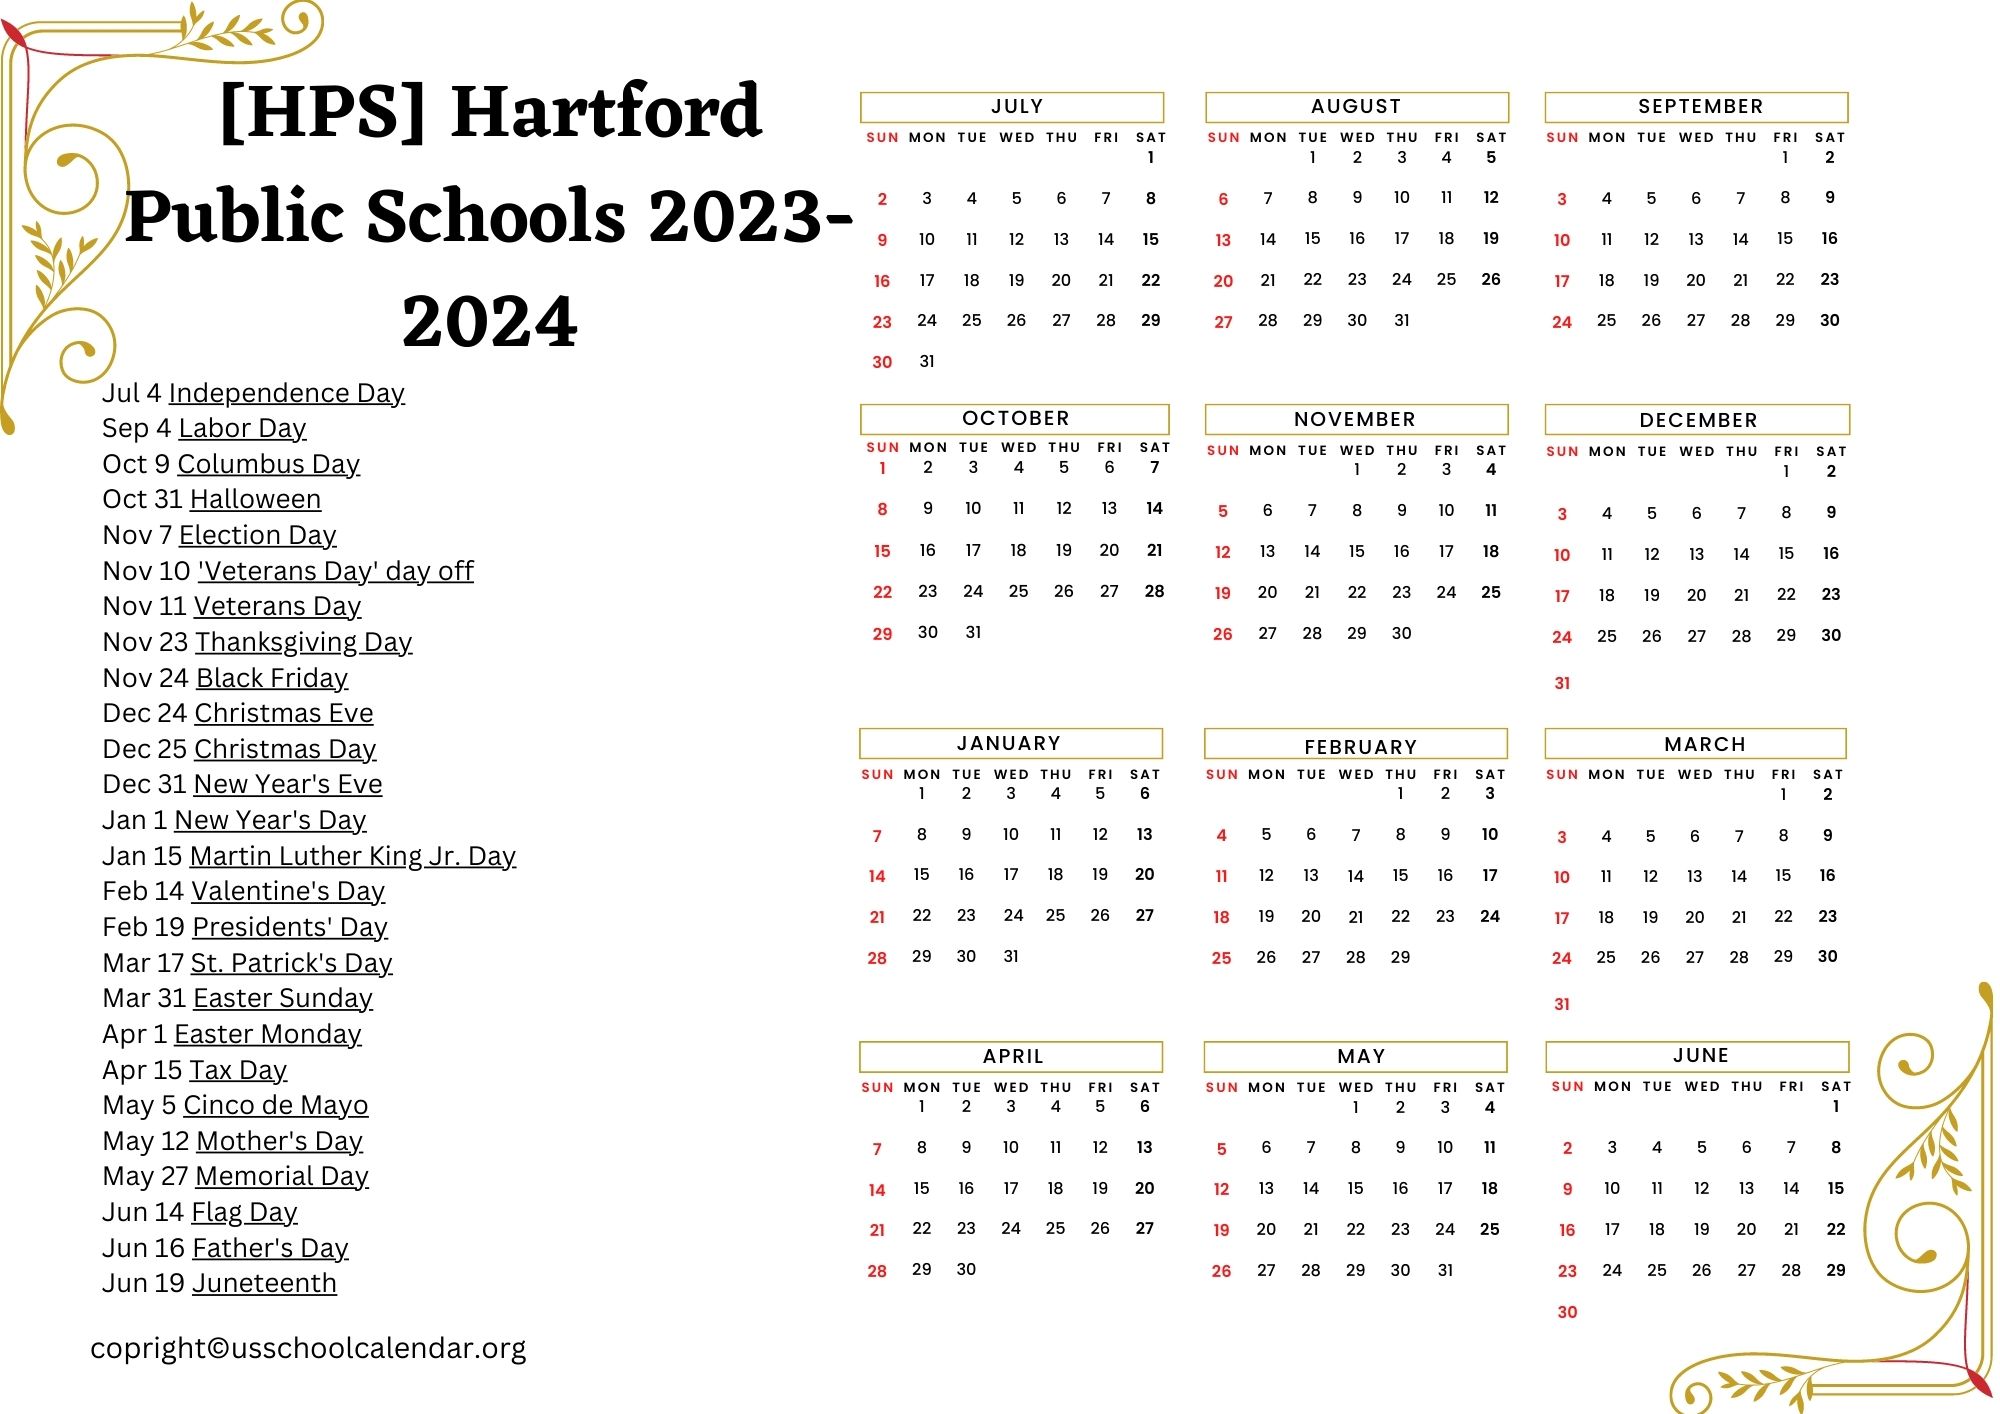 [HPS] Hartford Public Schools Calendar with Holidays 20232024